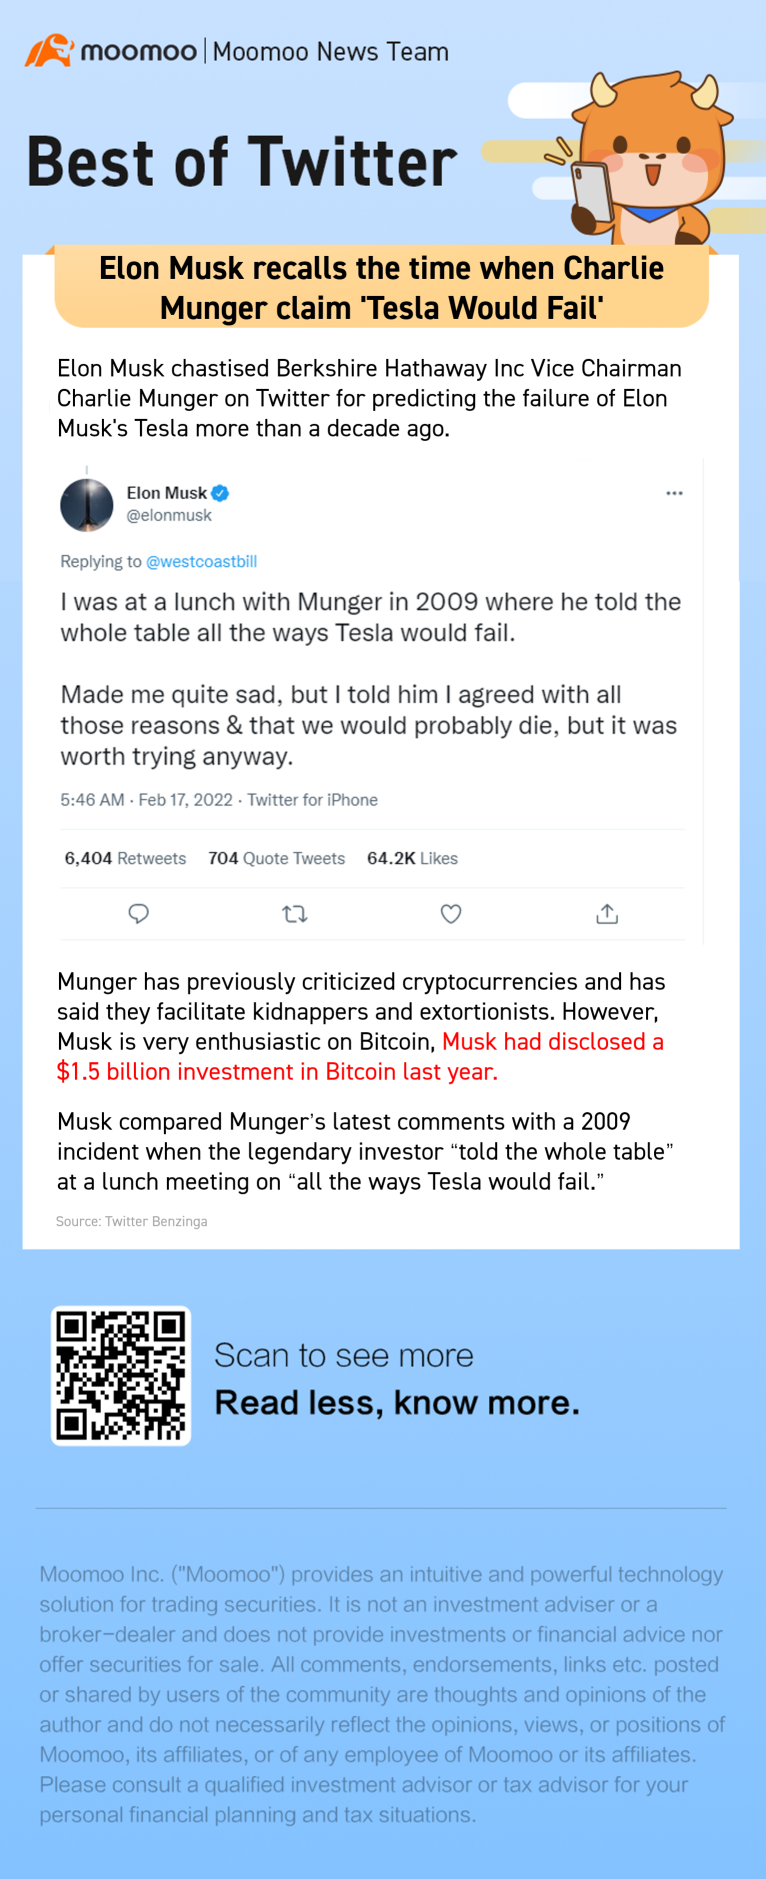 Elon Musk recalls the time when Charlie Munger claim 'Tesla Would Fail'